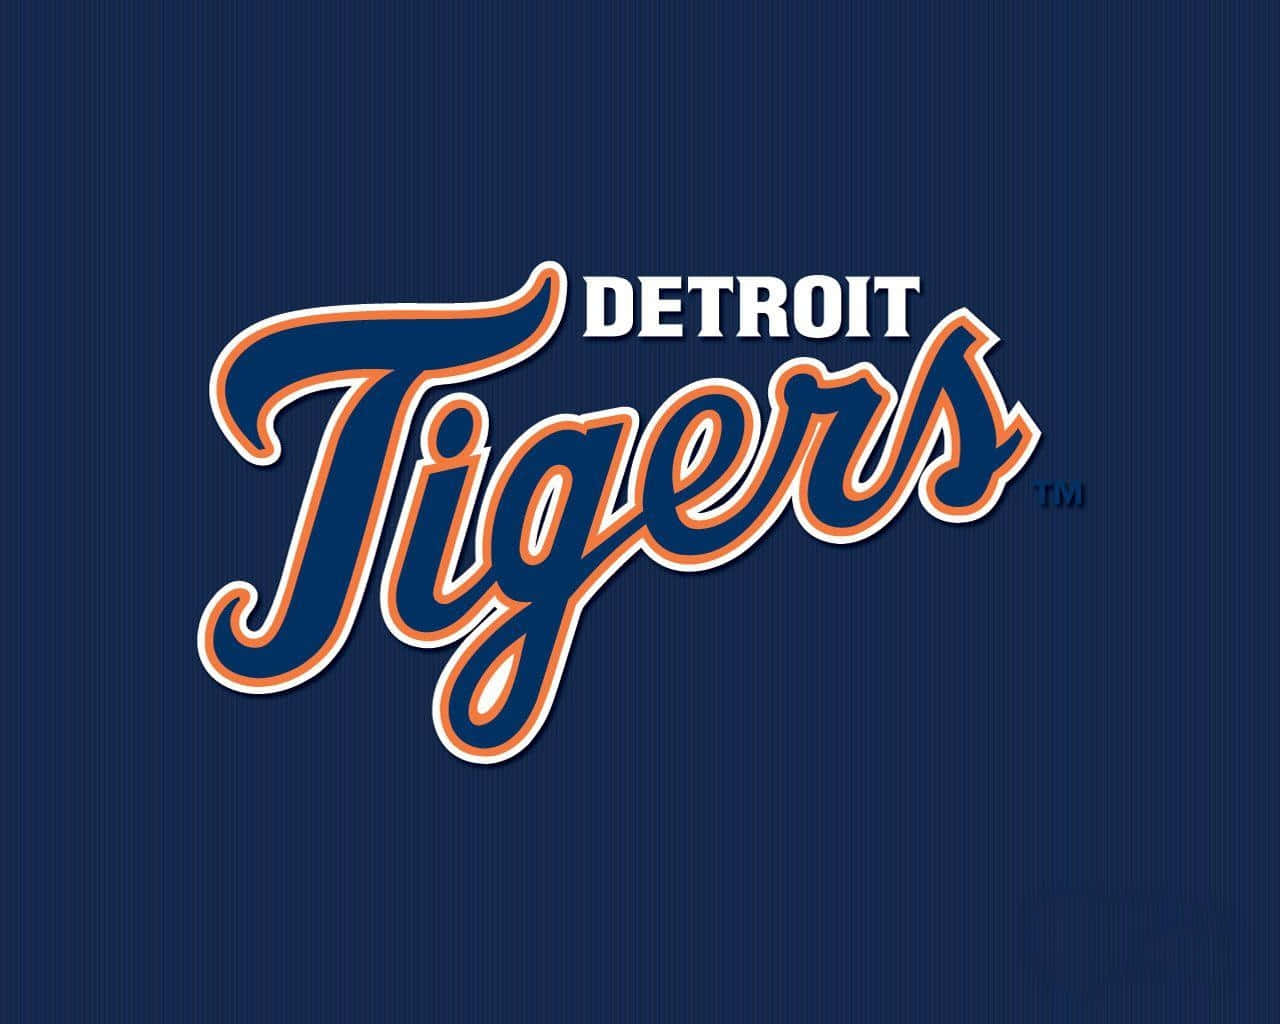 Detroit Tigers Logo On A Blue Background Wallpaper